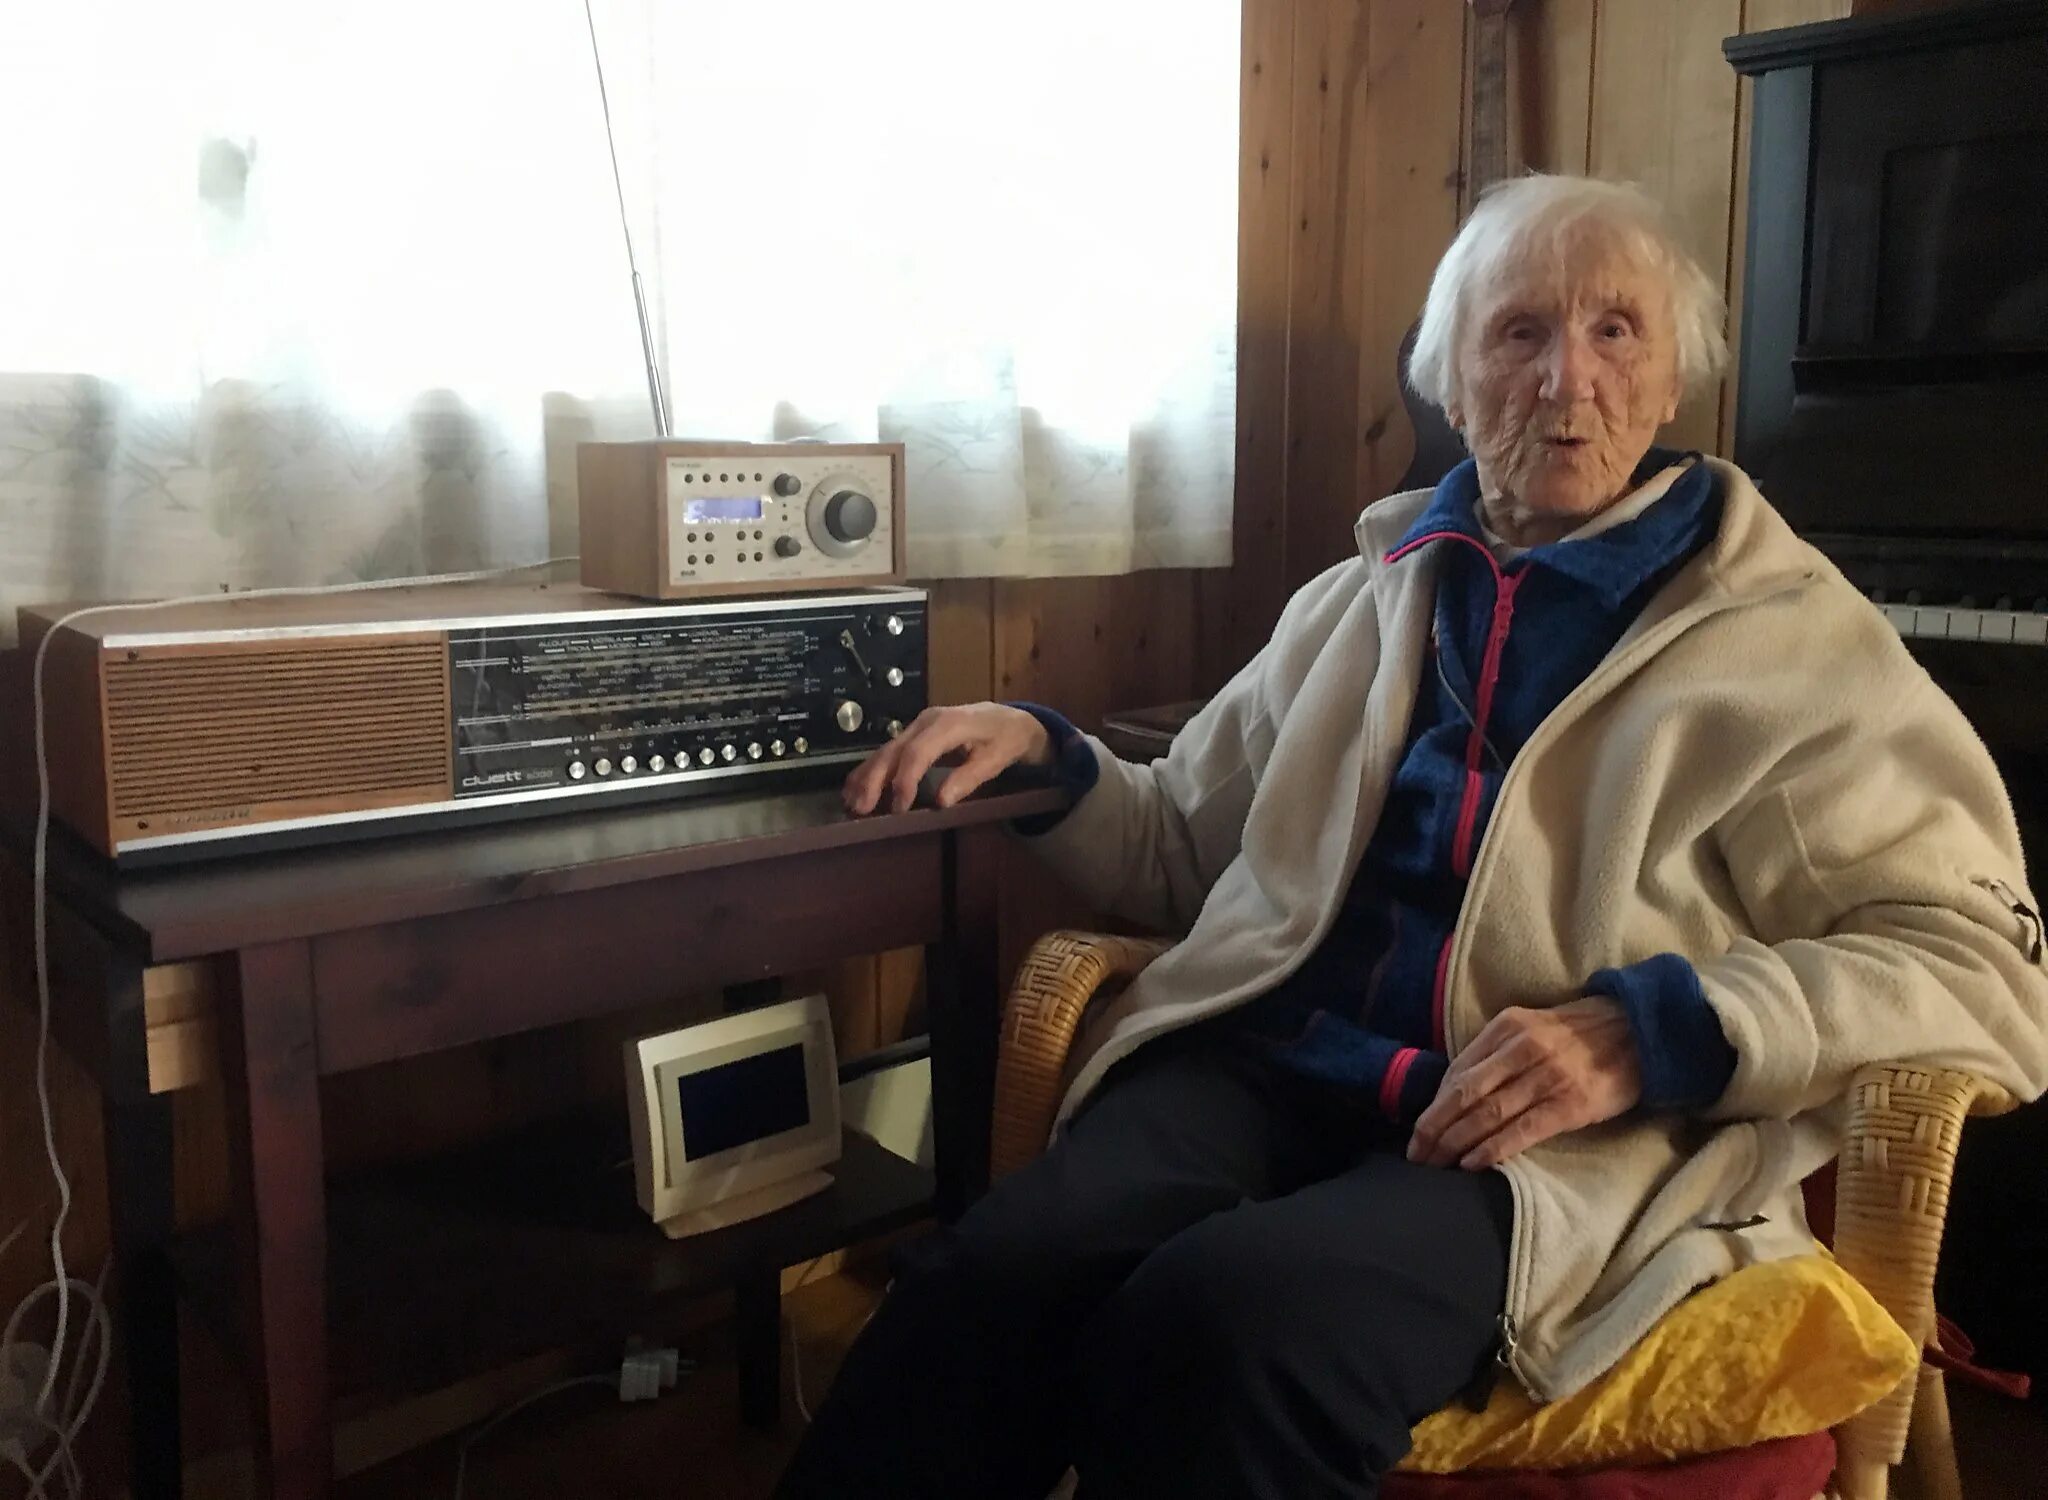 Старое радио послушаем. Прослушивание радио. Бабка у радио. Человек с радиоприемником. Бабушка с радио.